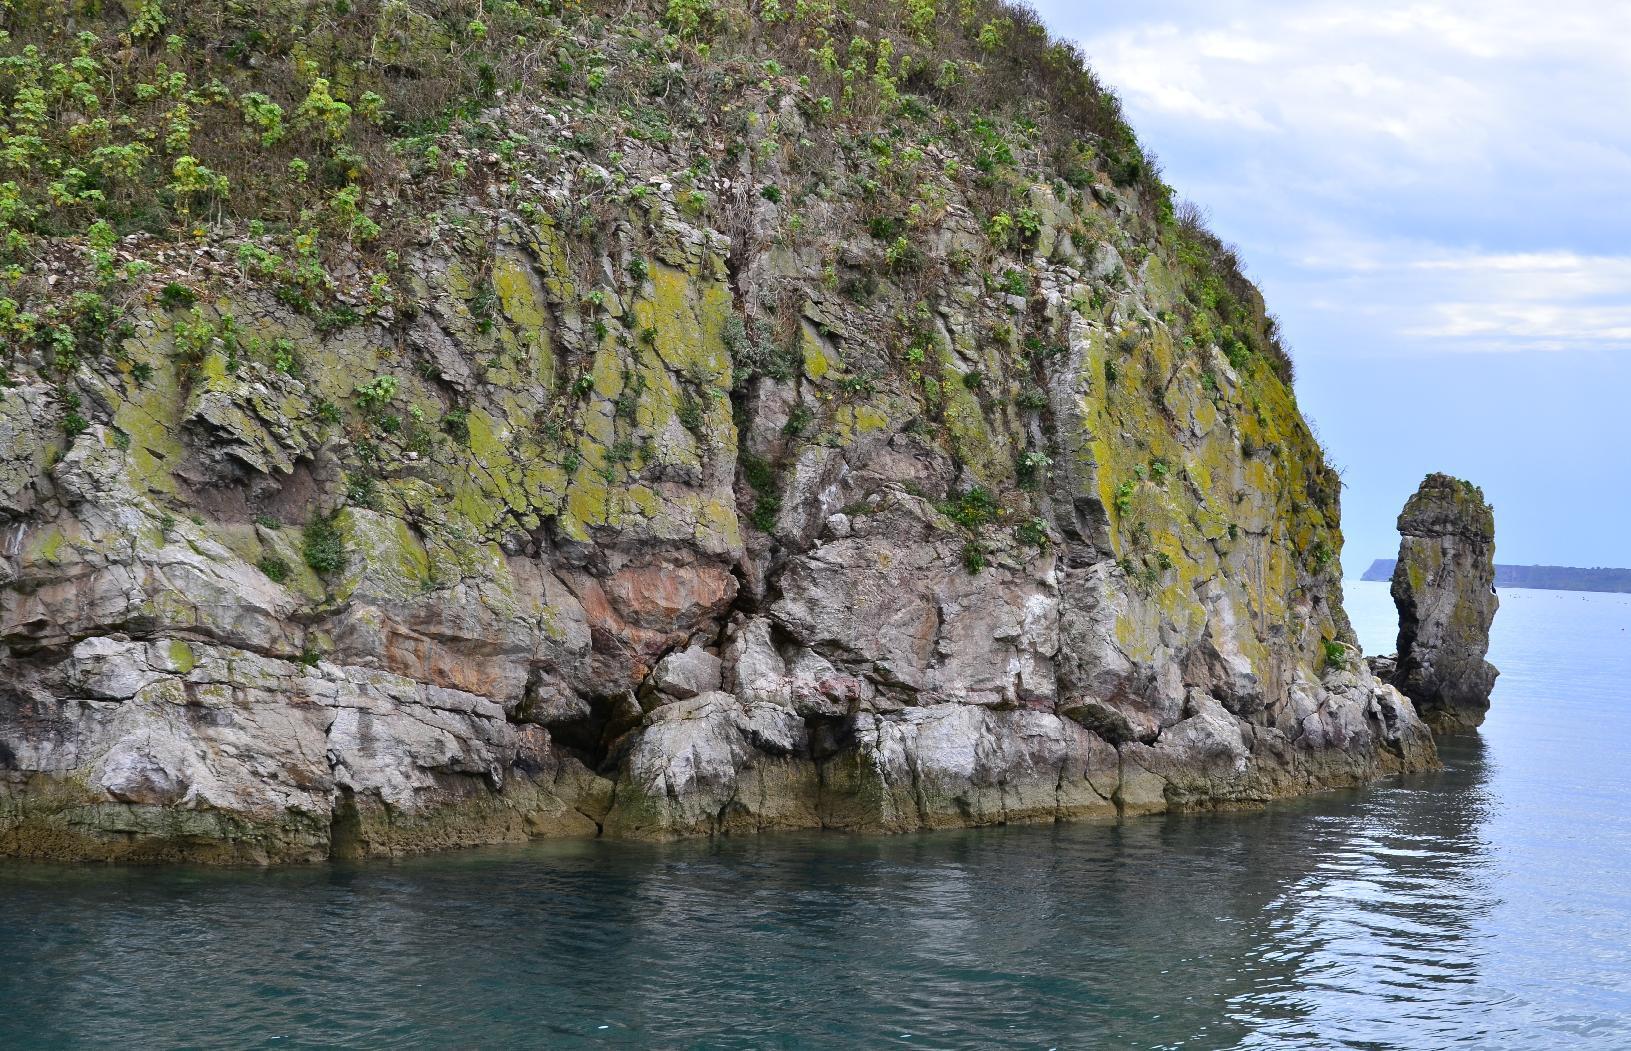 Limestone cliff edge